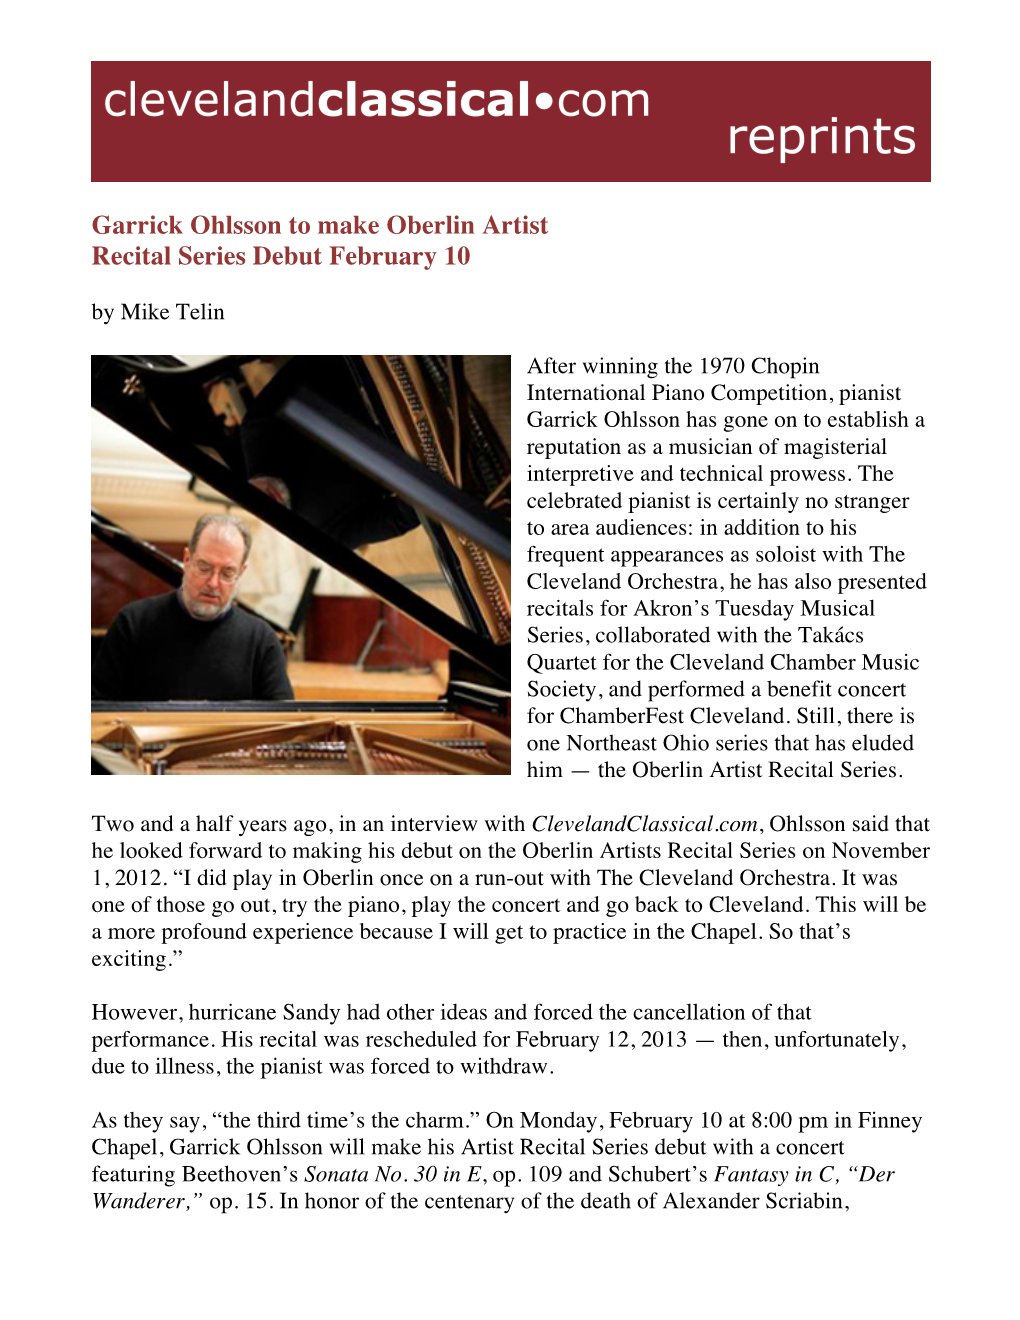 Garrick Ohlsson to Make Oberlin Artist Recital Series Debut February 10 by Mike Telin